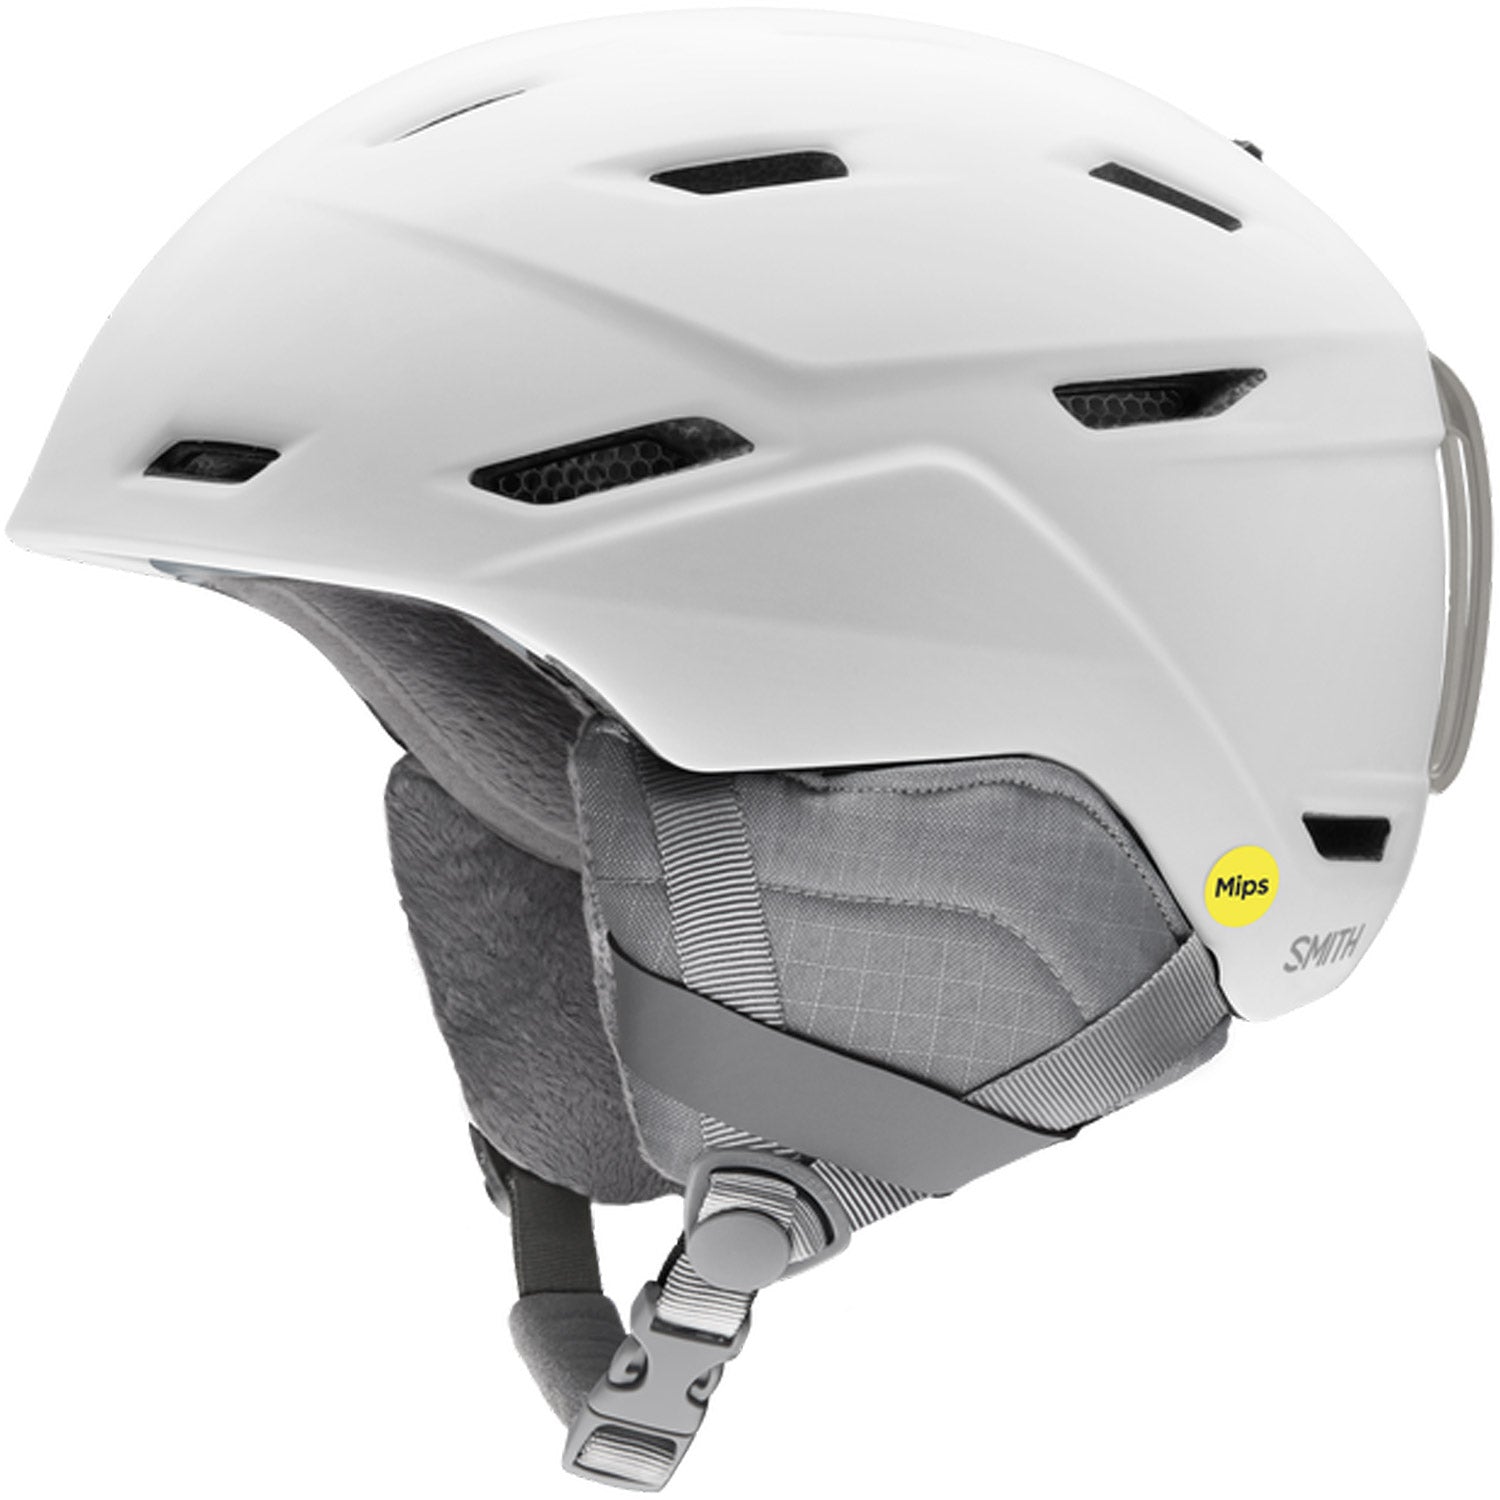 Prospect Jr. MIPS Snow Helmet